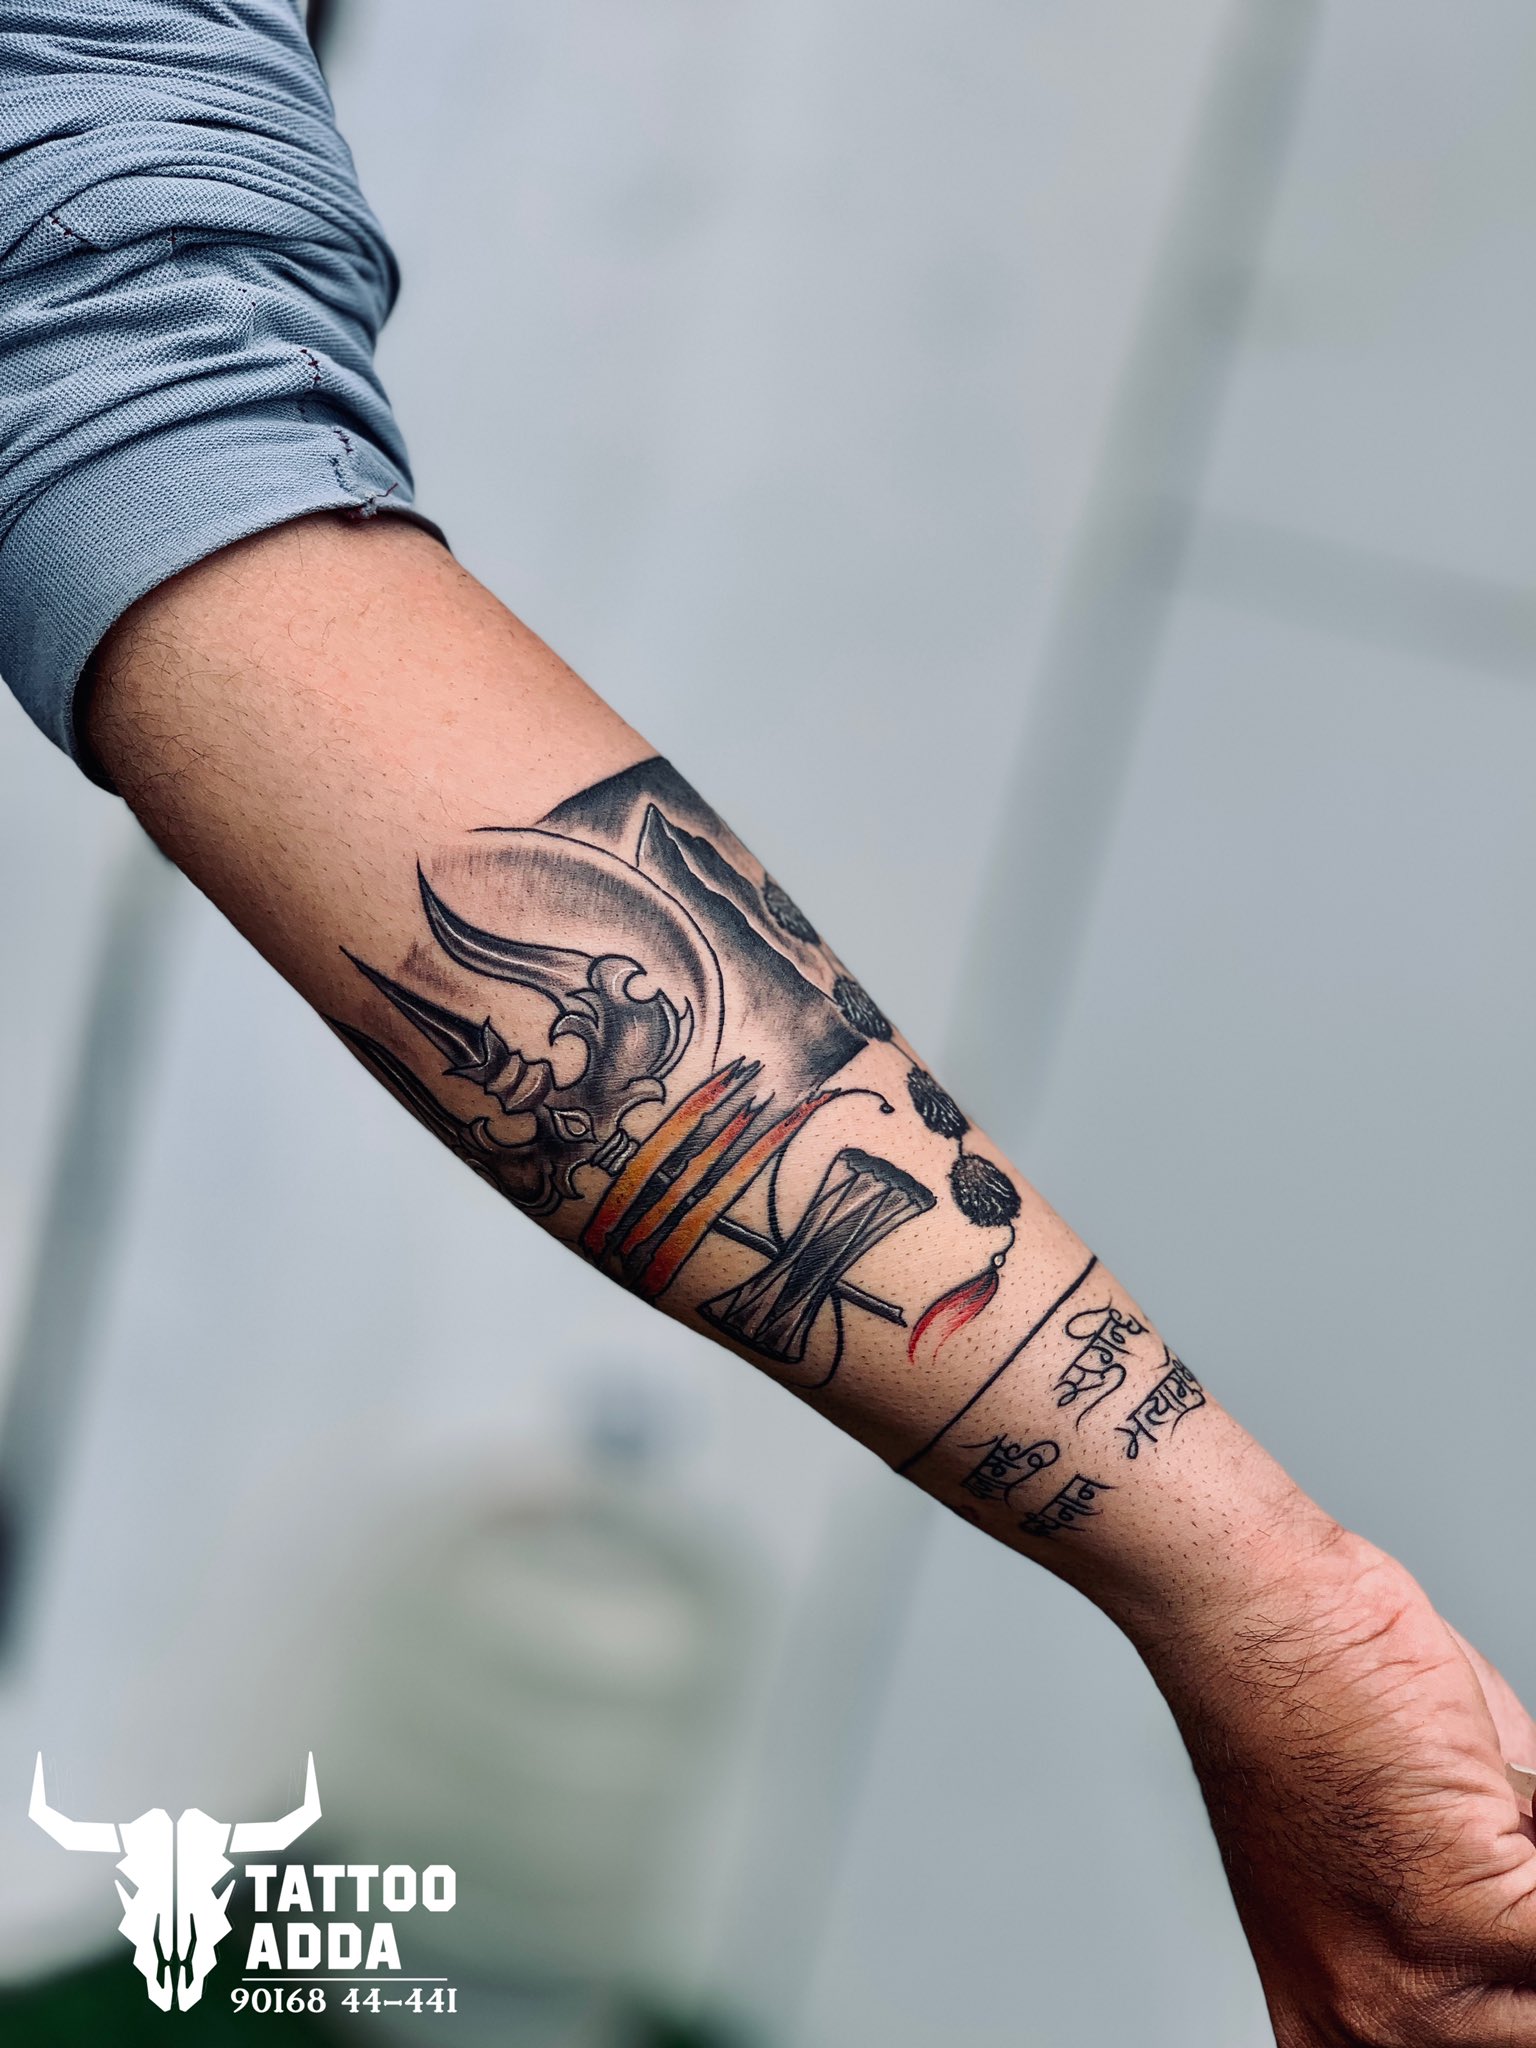 Nirav Tattoo on Twitter mahadev tattoo by nirav tattoo in kalol  httpstcoNuTtJeP6Ps  Twitter